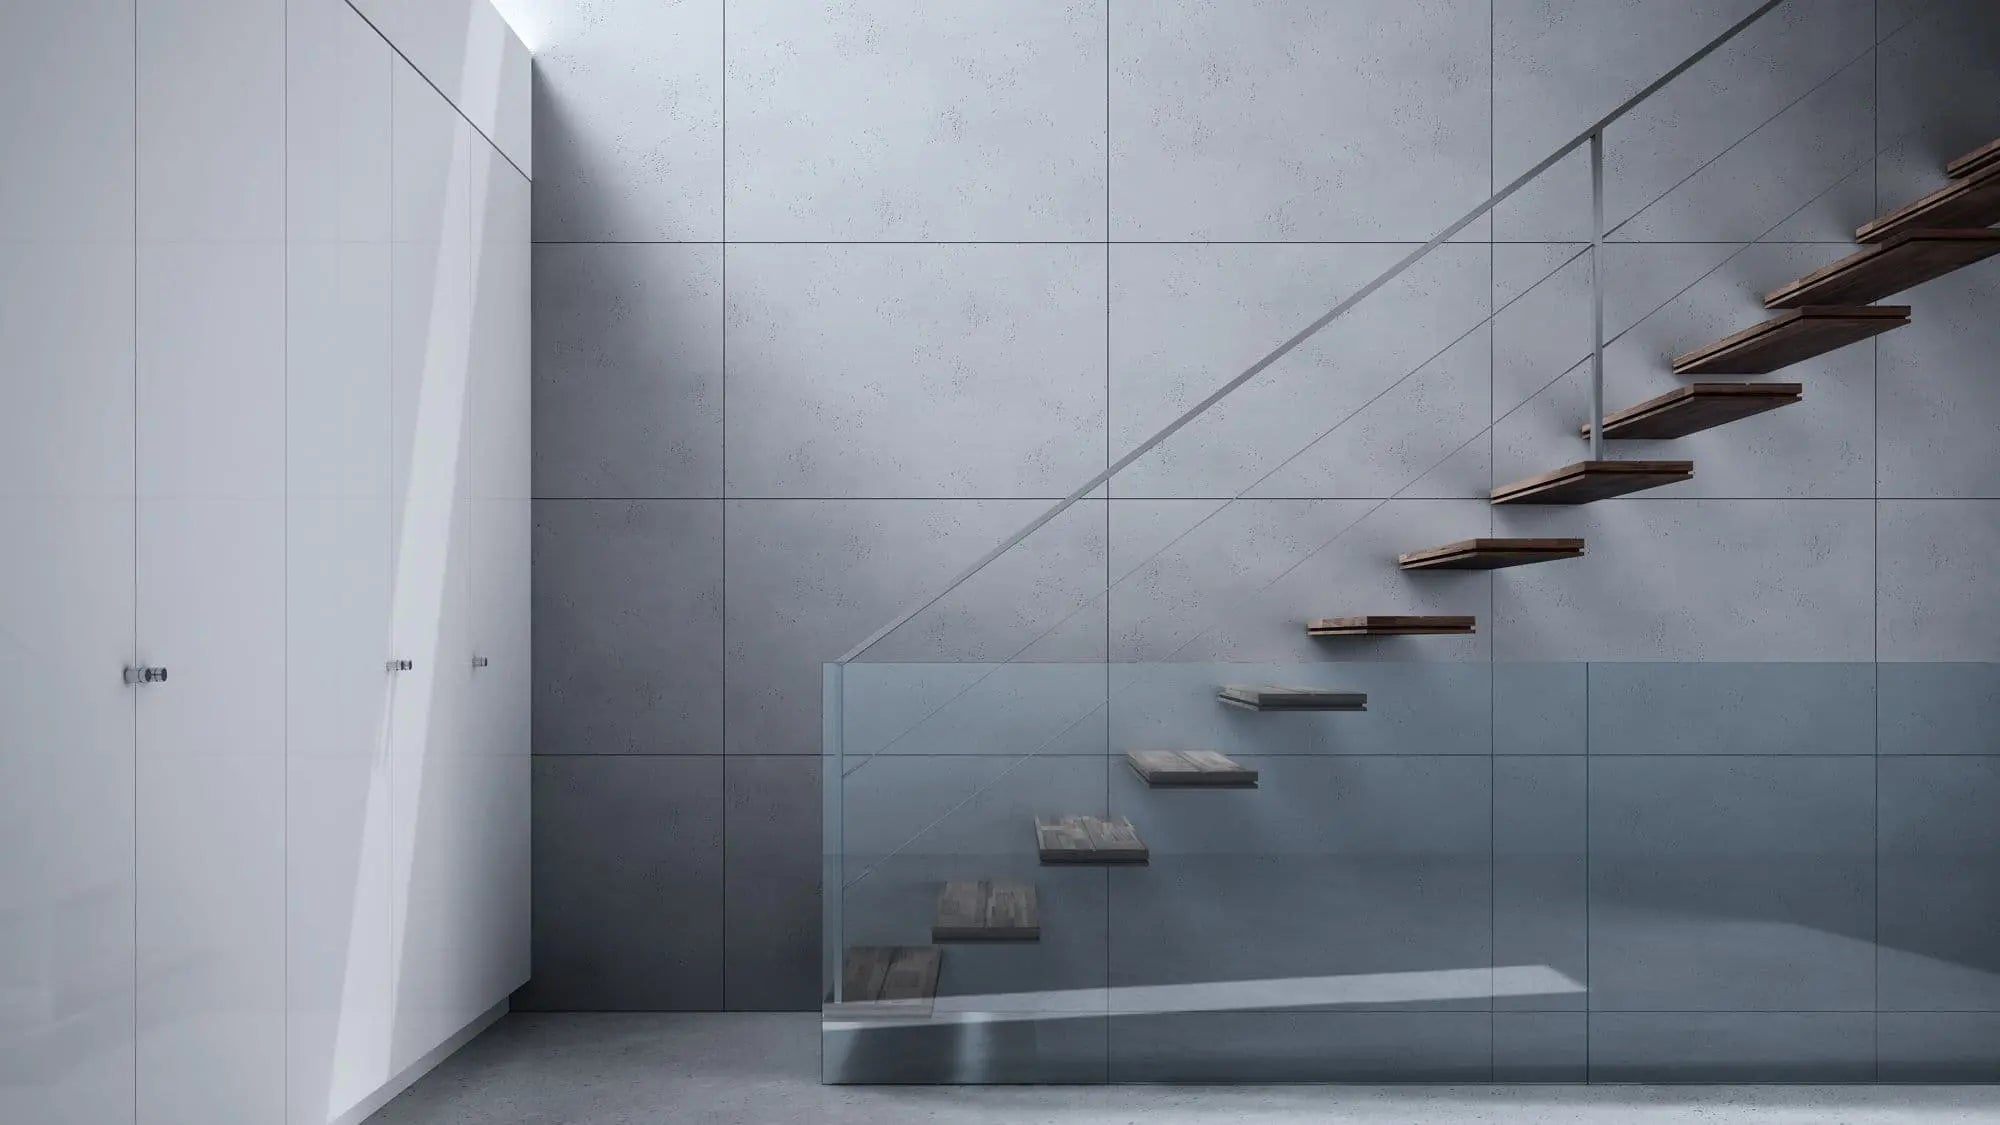 Concrete panels VHCT Decormania staircase interior